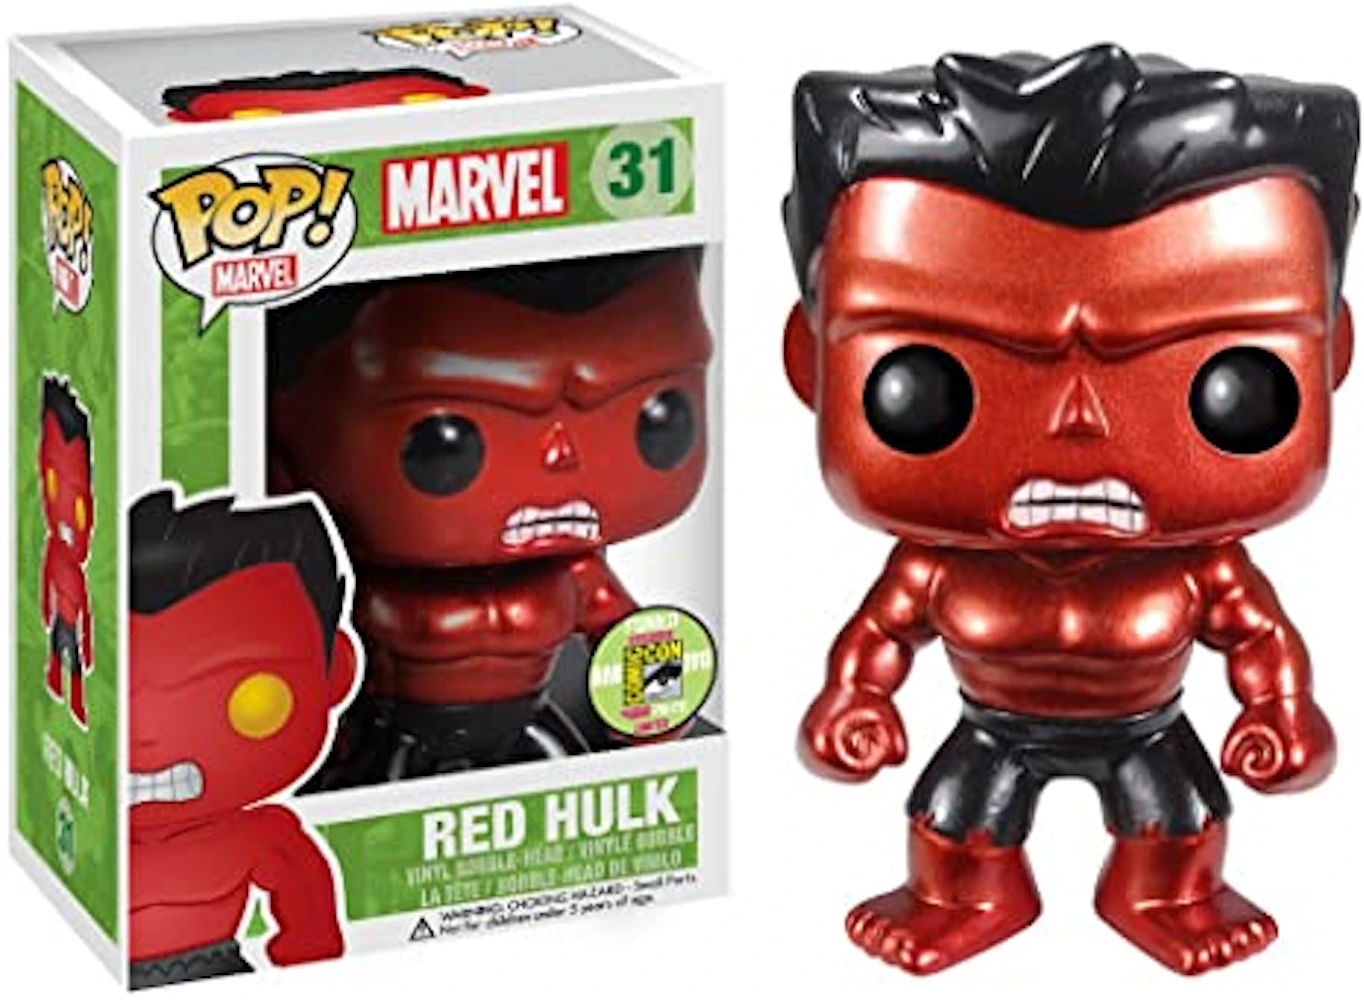 Funko Pop Avengers Hulk 451 Glows Hot topic